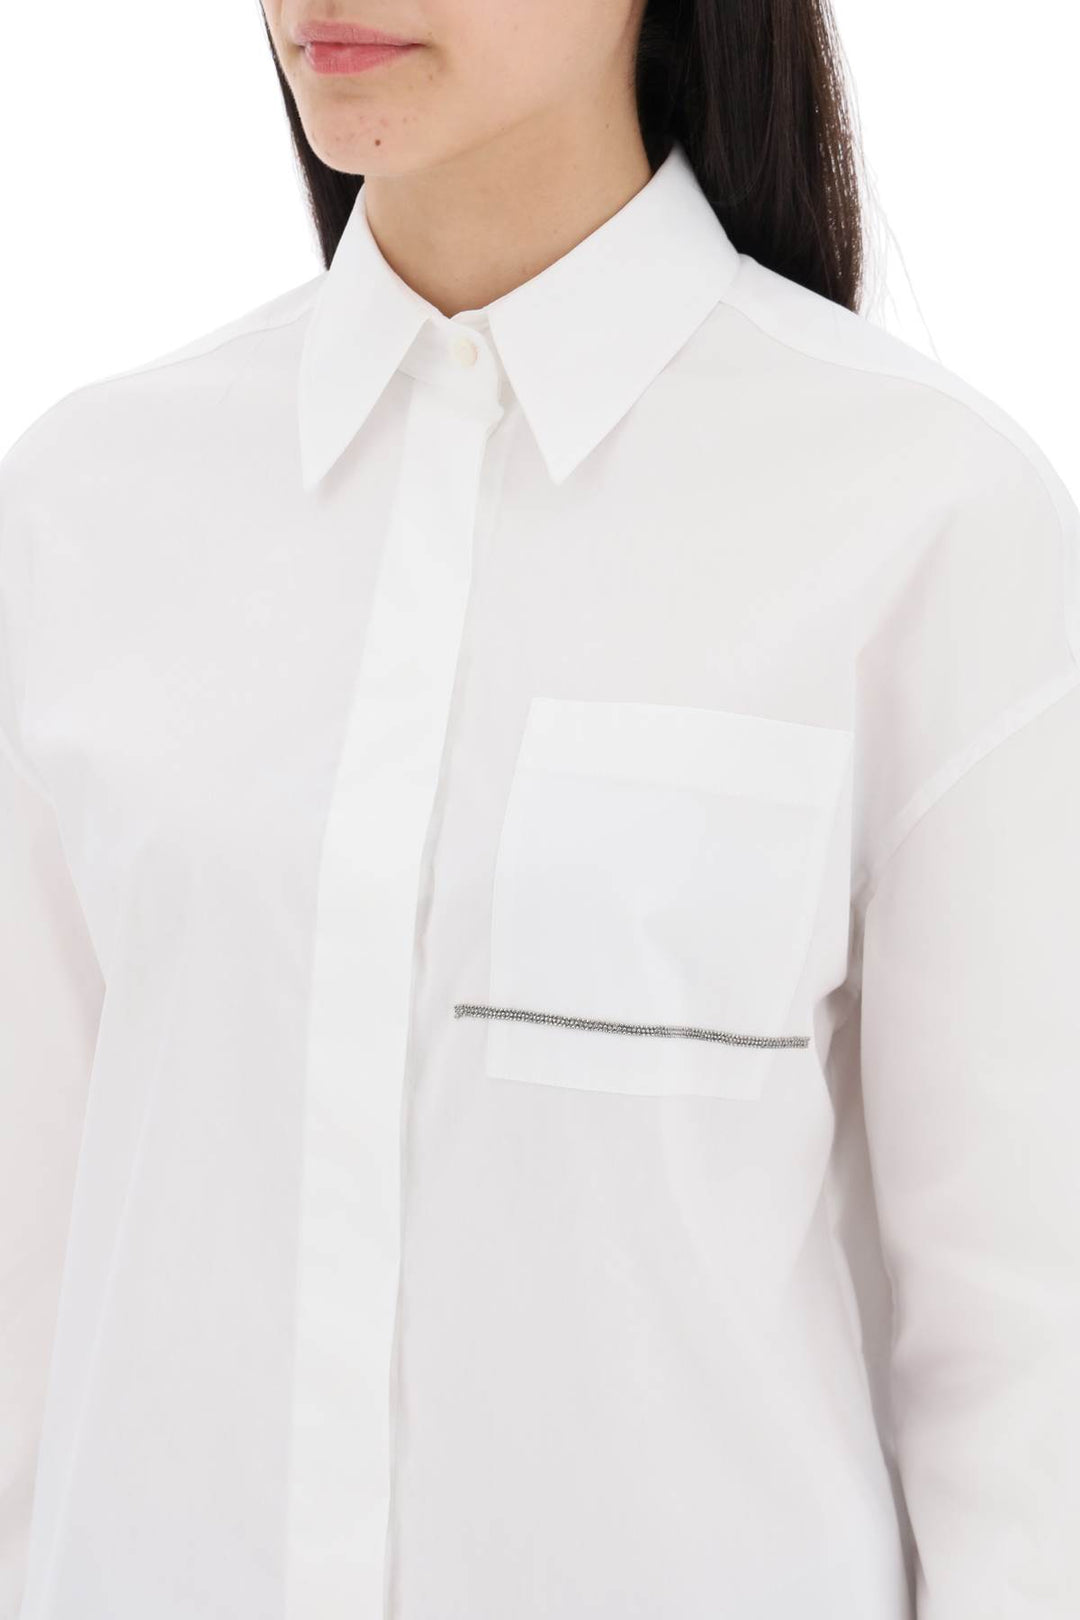 Brunello Cucinelli Shirt With Jewel Detail   Bianco